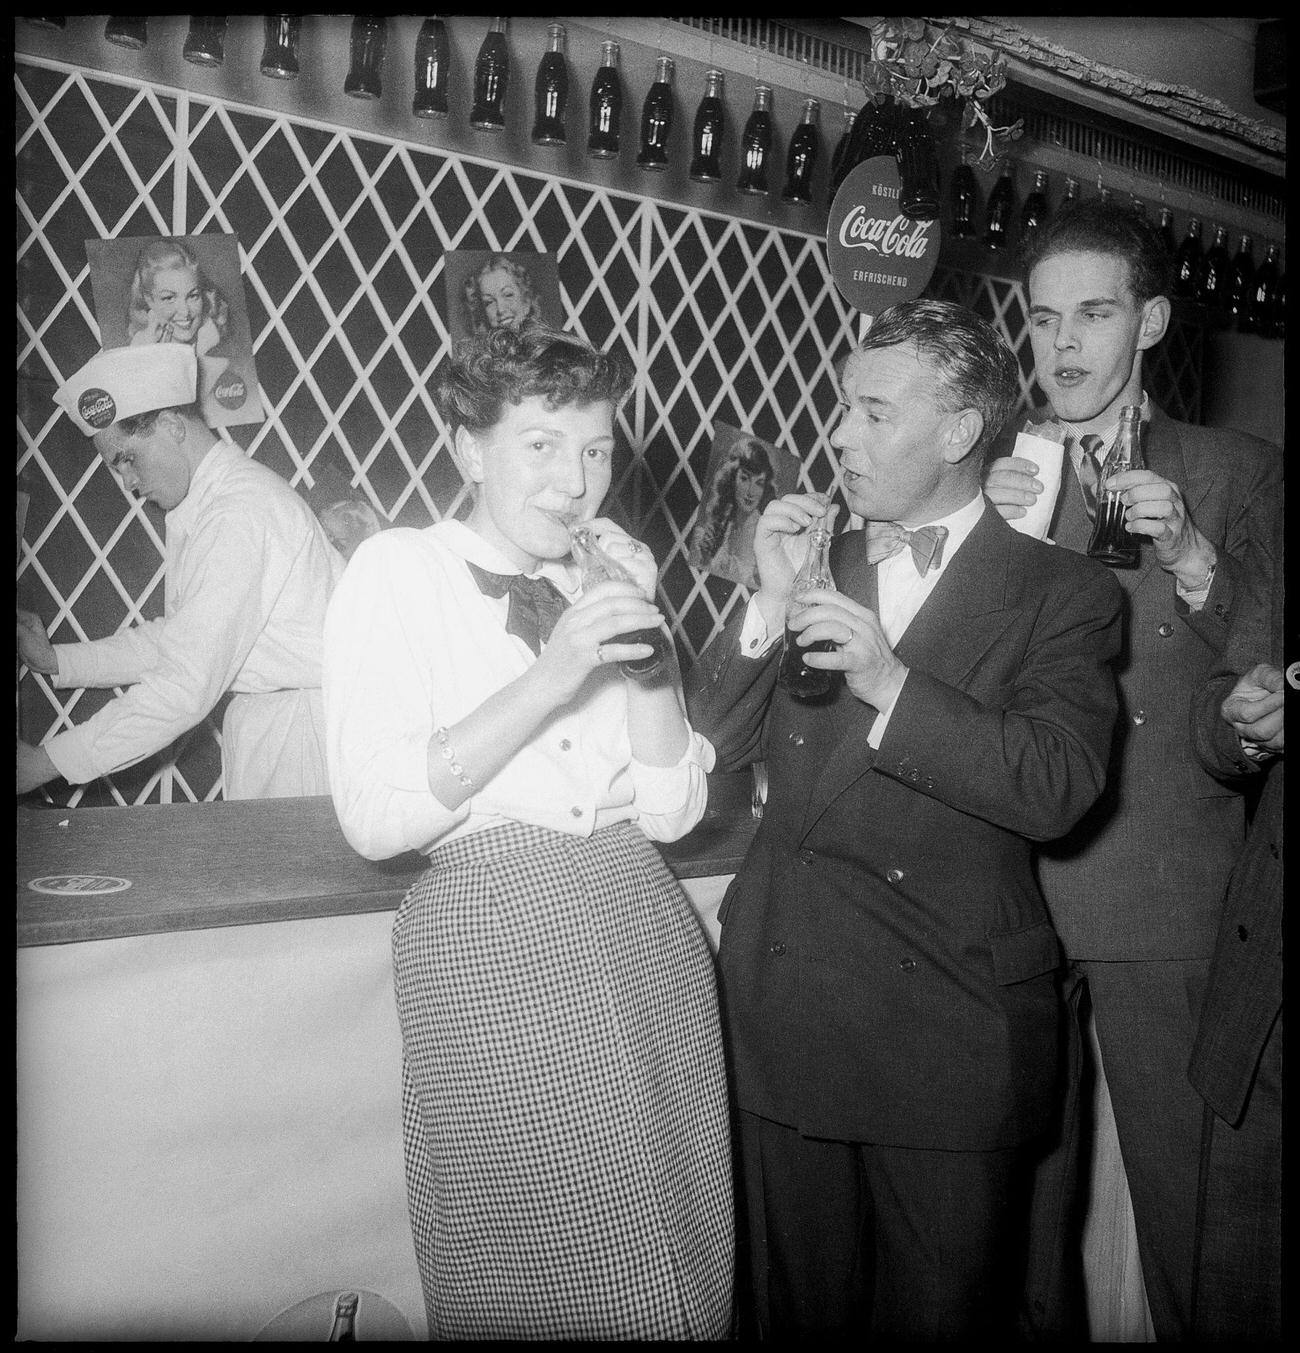 Coca-Cola promotion party, 1949.